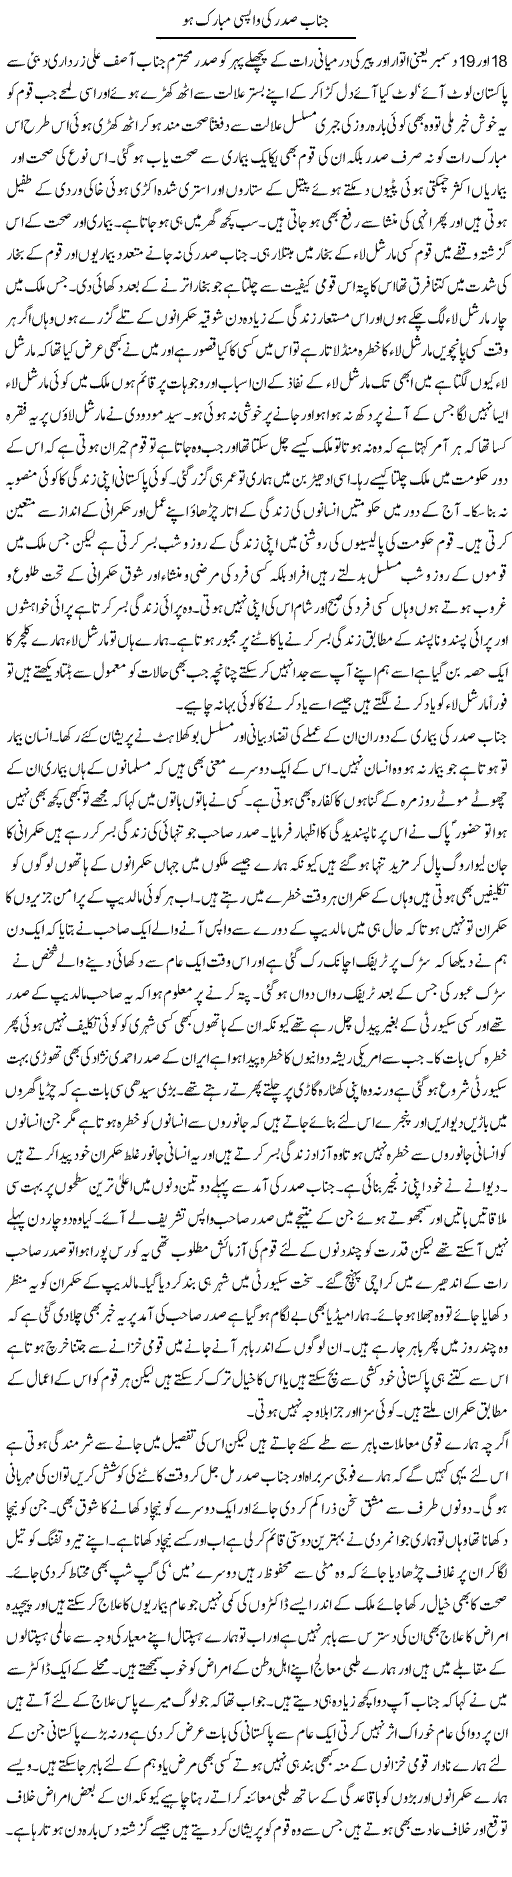 Health of President Zardari - Urdu Column